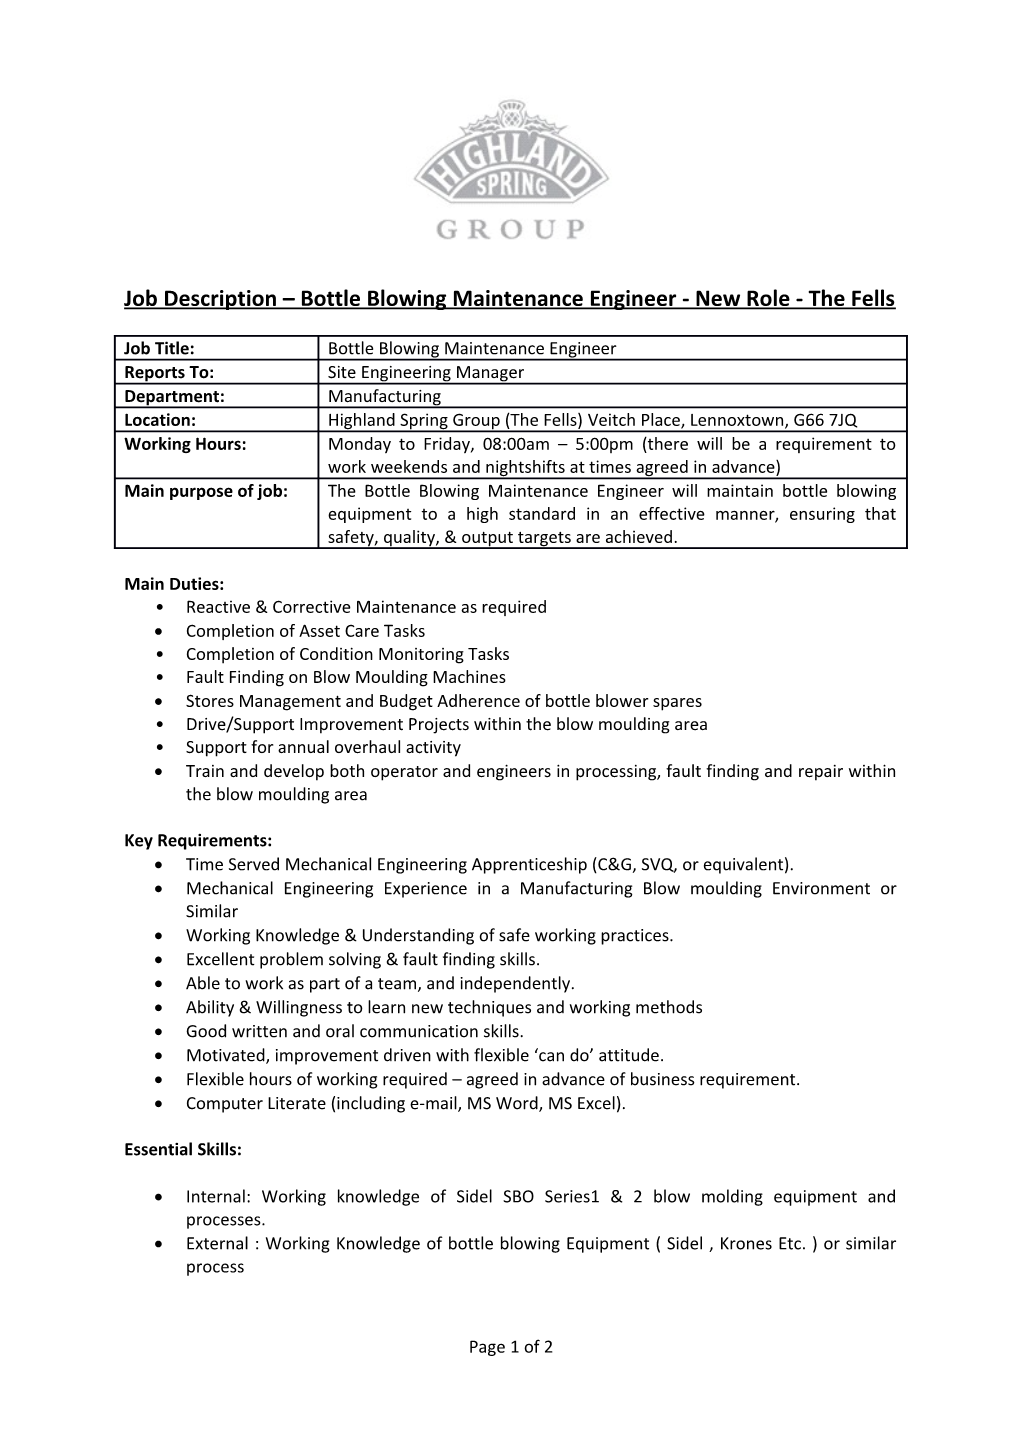 Job Description Bottle Blowing Maintenance Engineer - New Role - the Fells